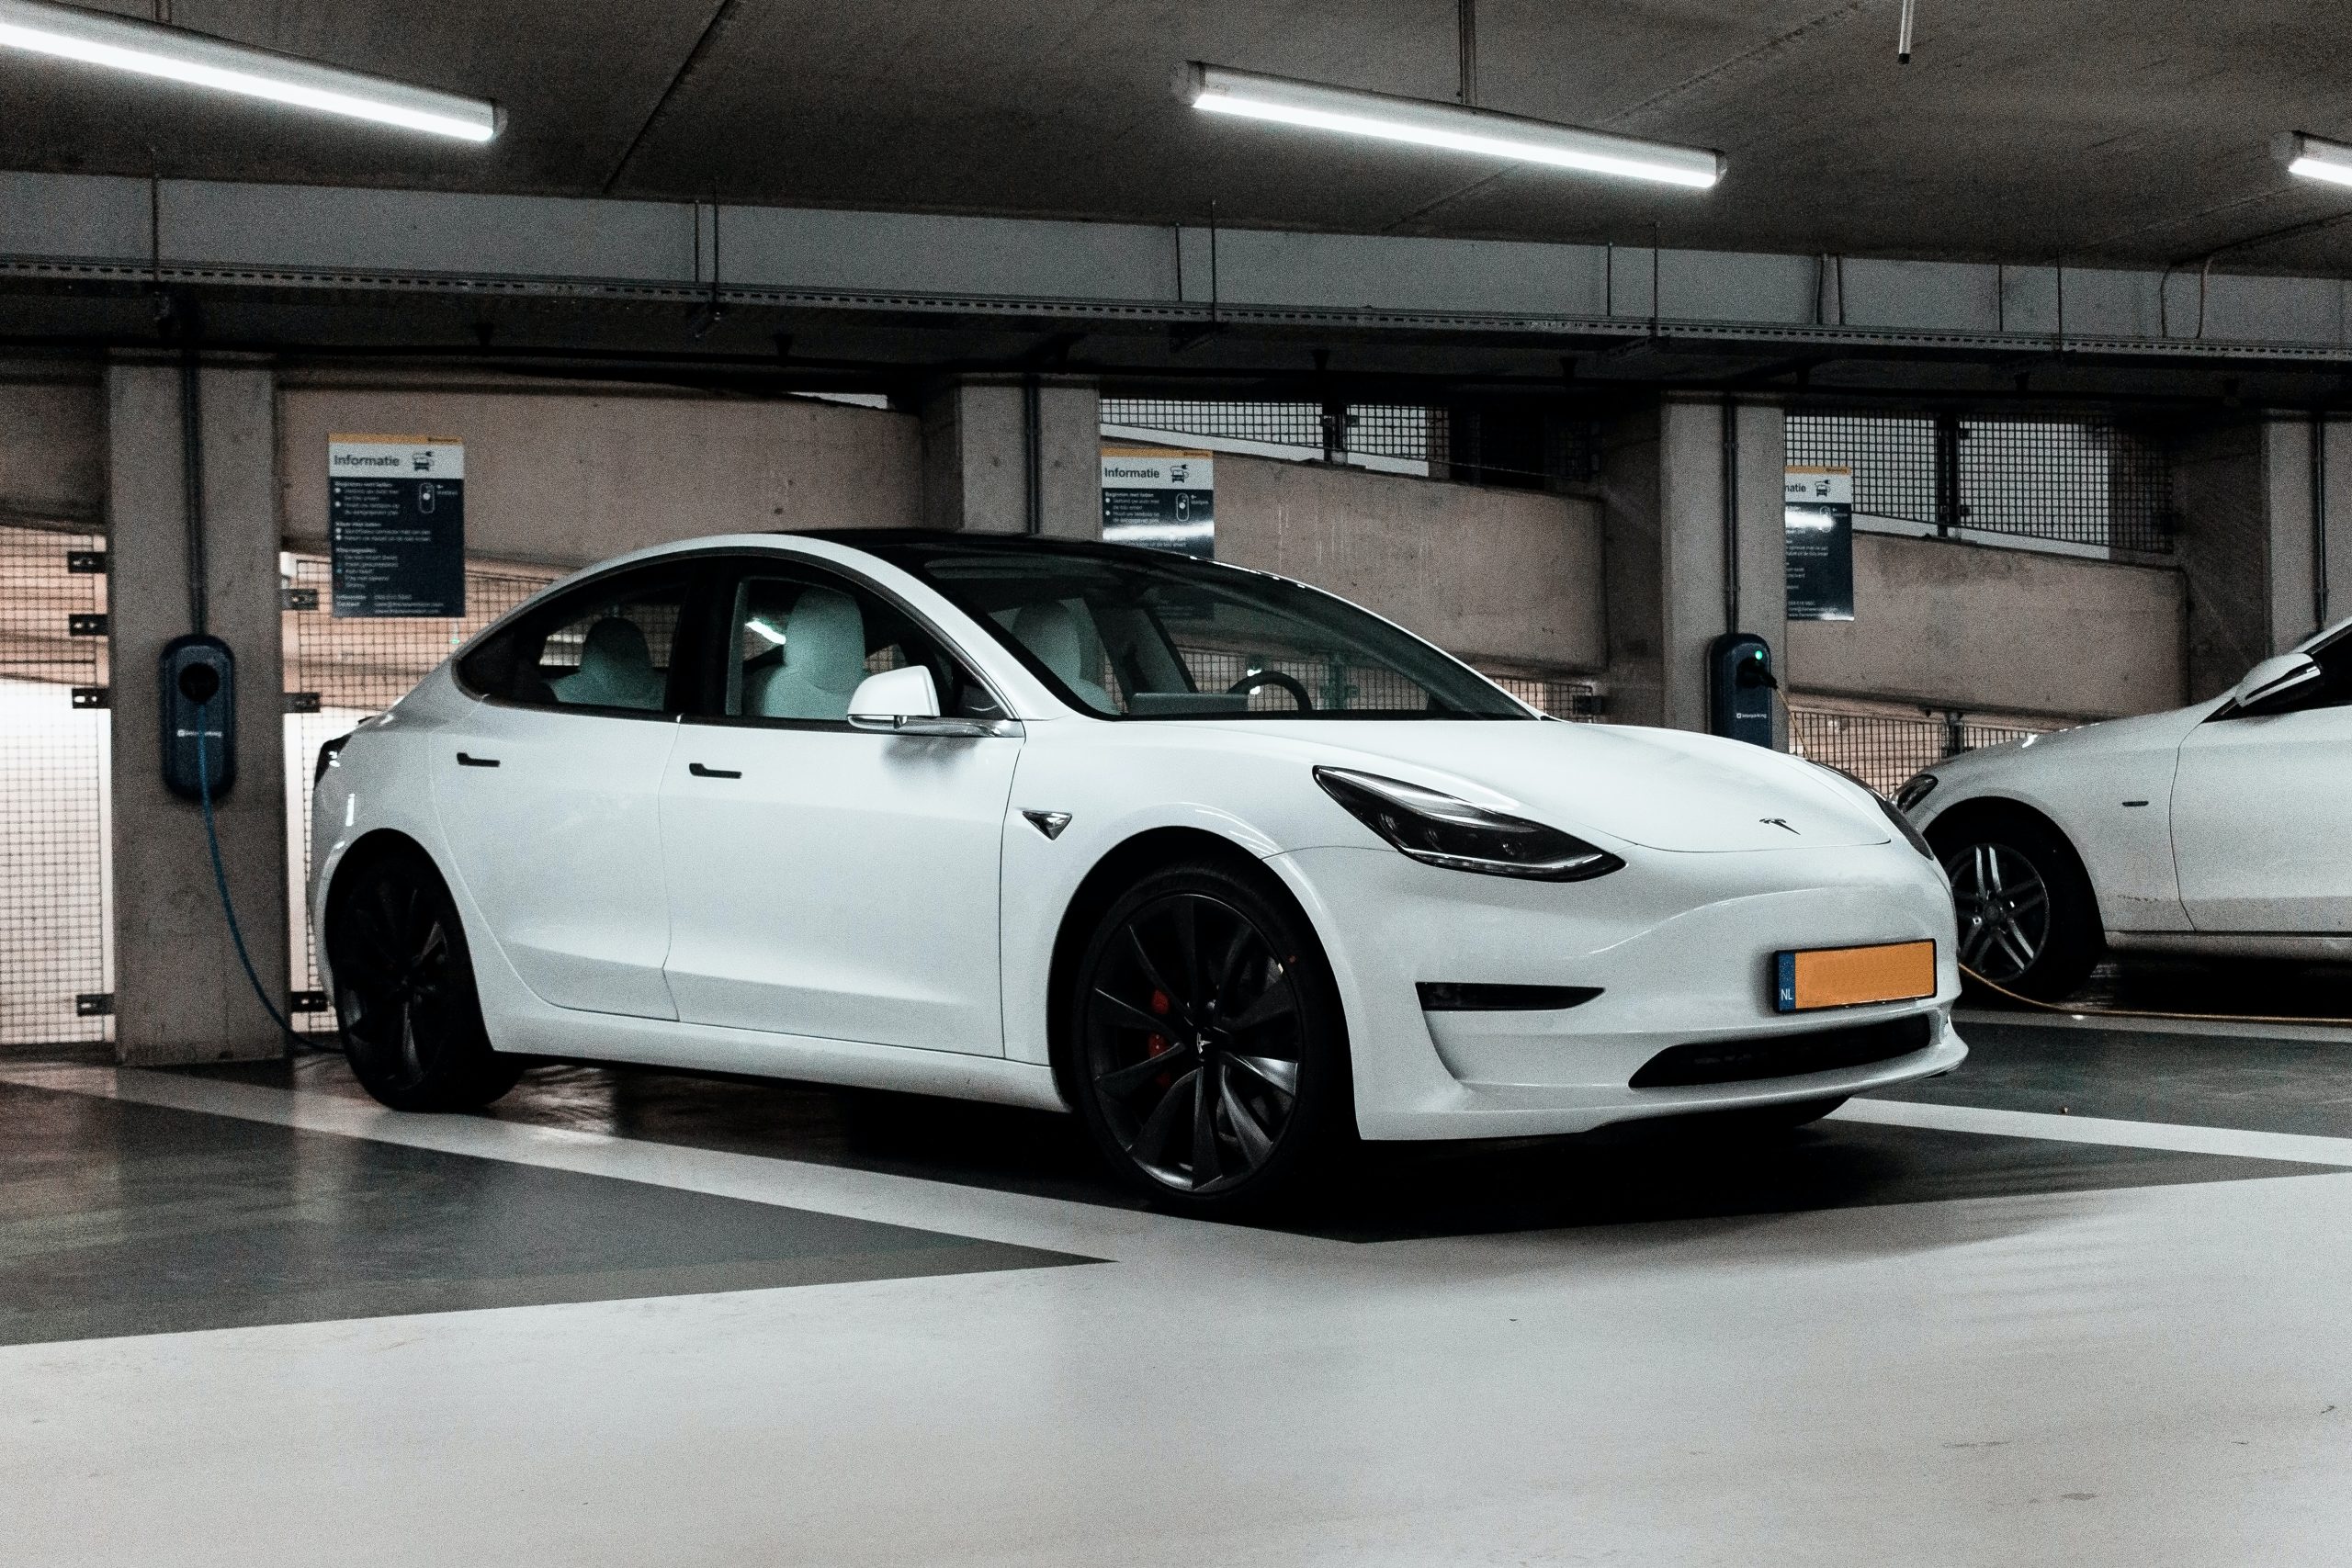 Pearl White Tesla Model 3 Parked in a Parking Garage